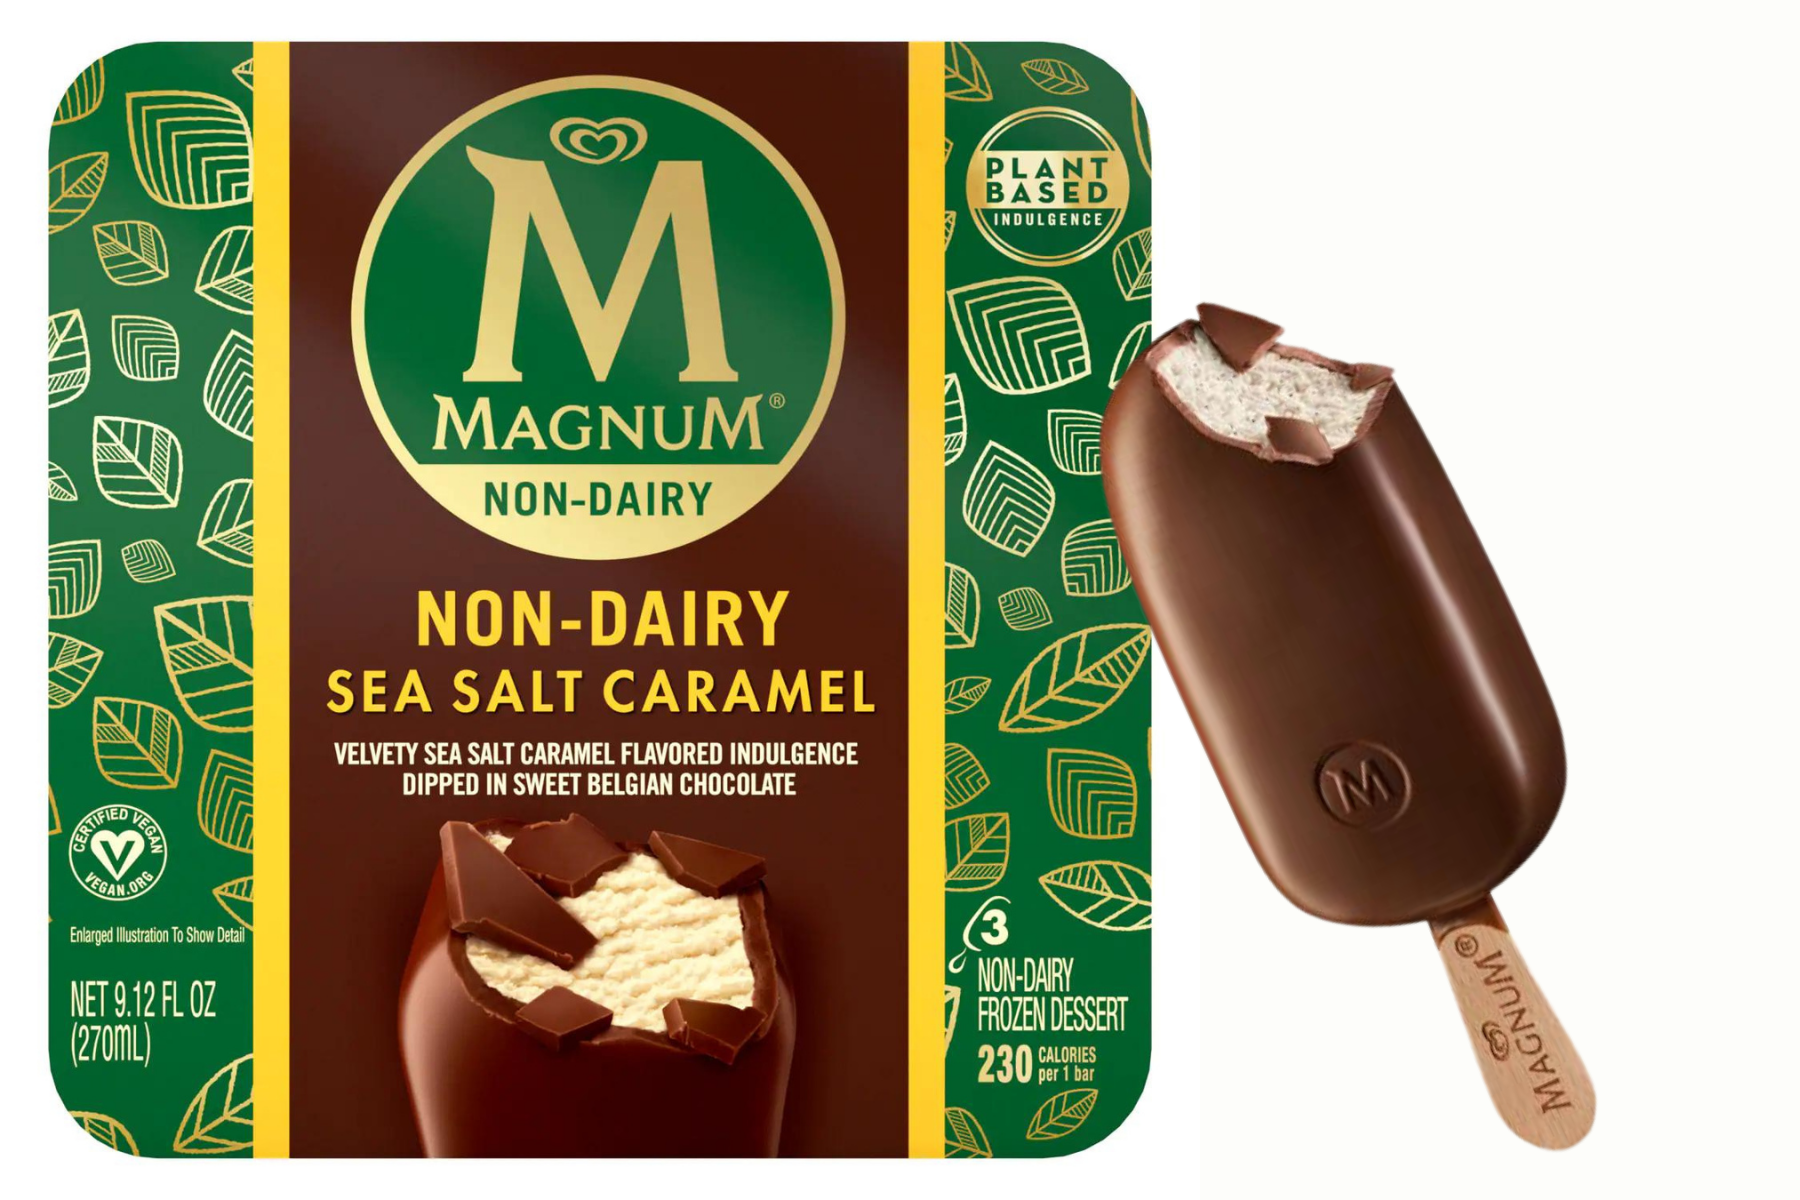 A vegan chocolate covered sea salt caramel ice cream bar leans on a box of Magnum Non-Dairy Sea Salt Caramel ice cream bars